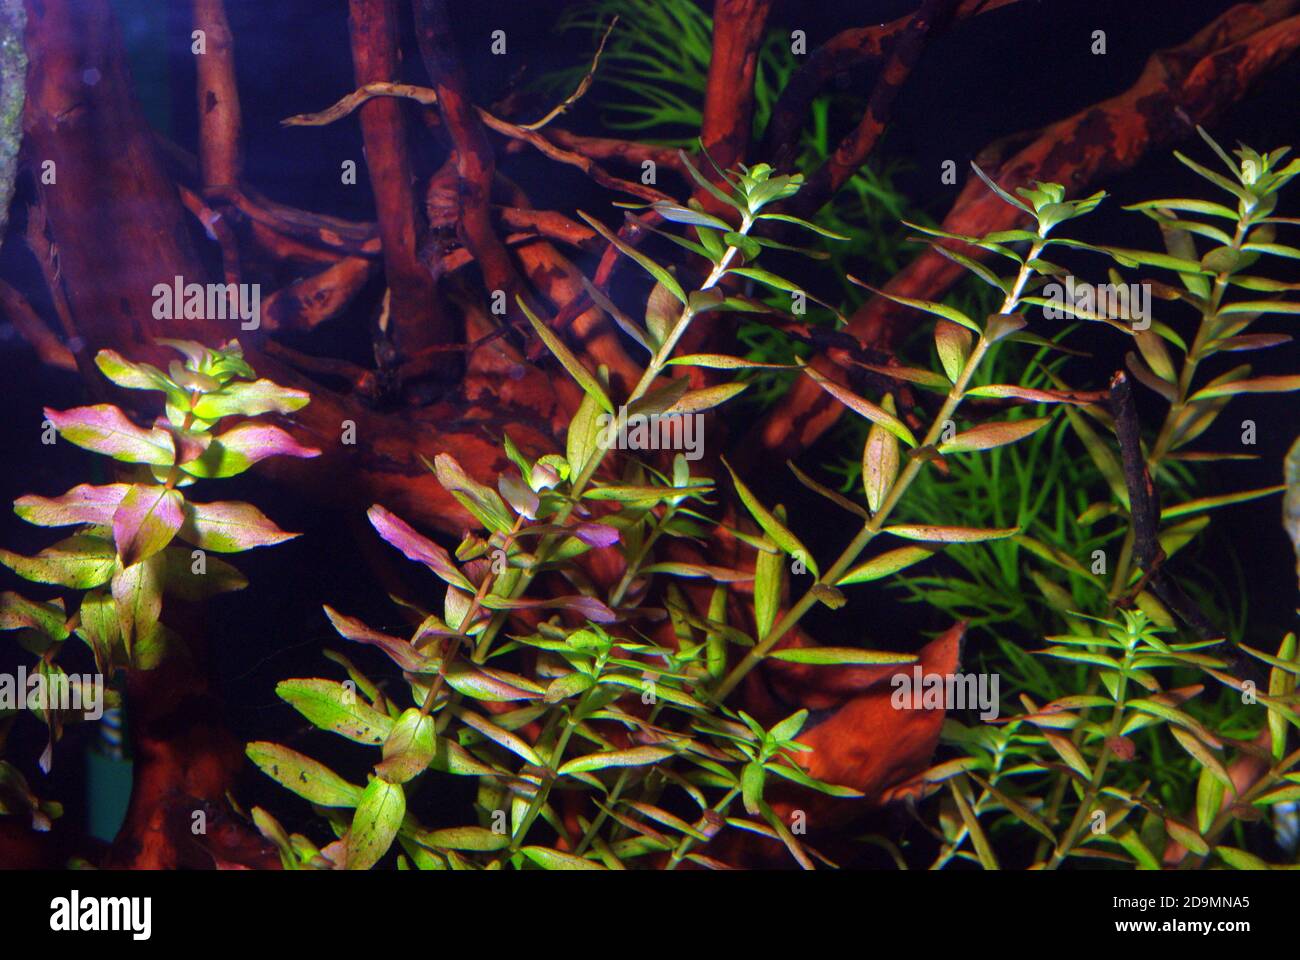 Ohototropism in aquarium plant (Rotala rotundifolia) Stock Photo